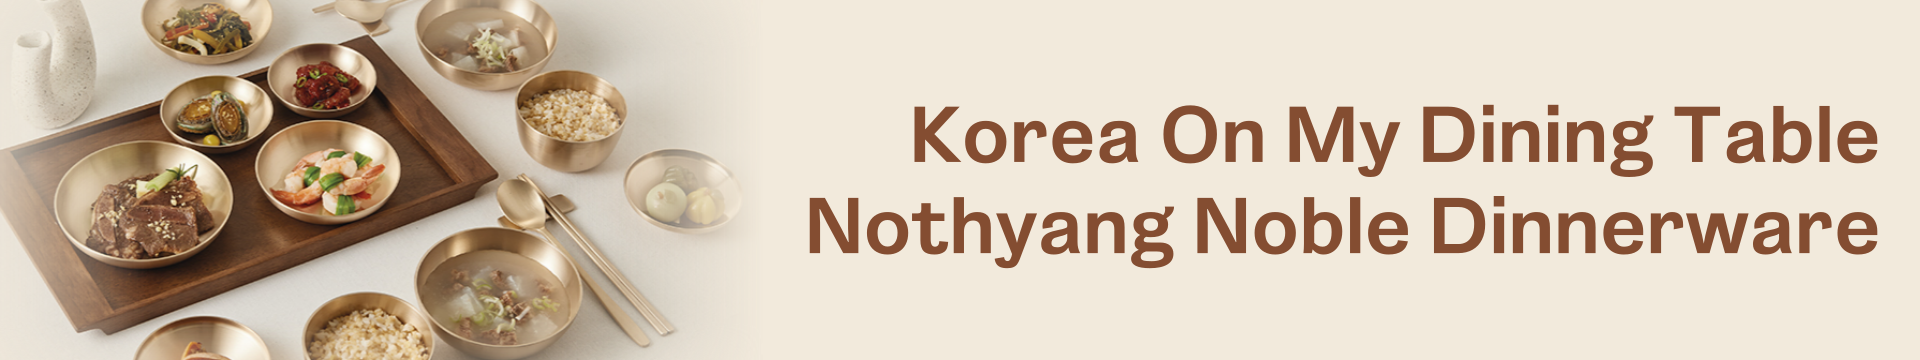 韓國食品-ko-living-nothyang